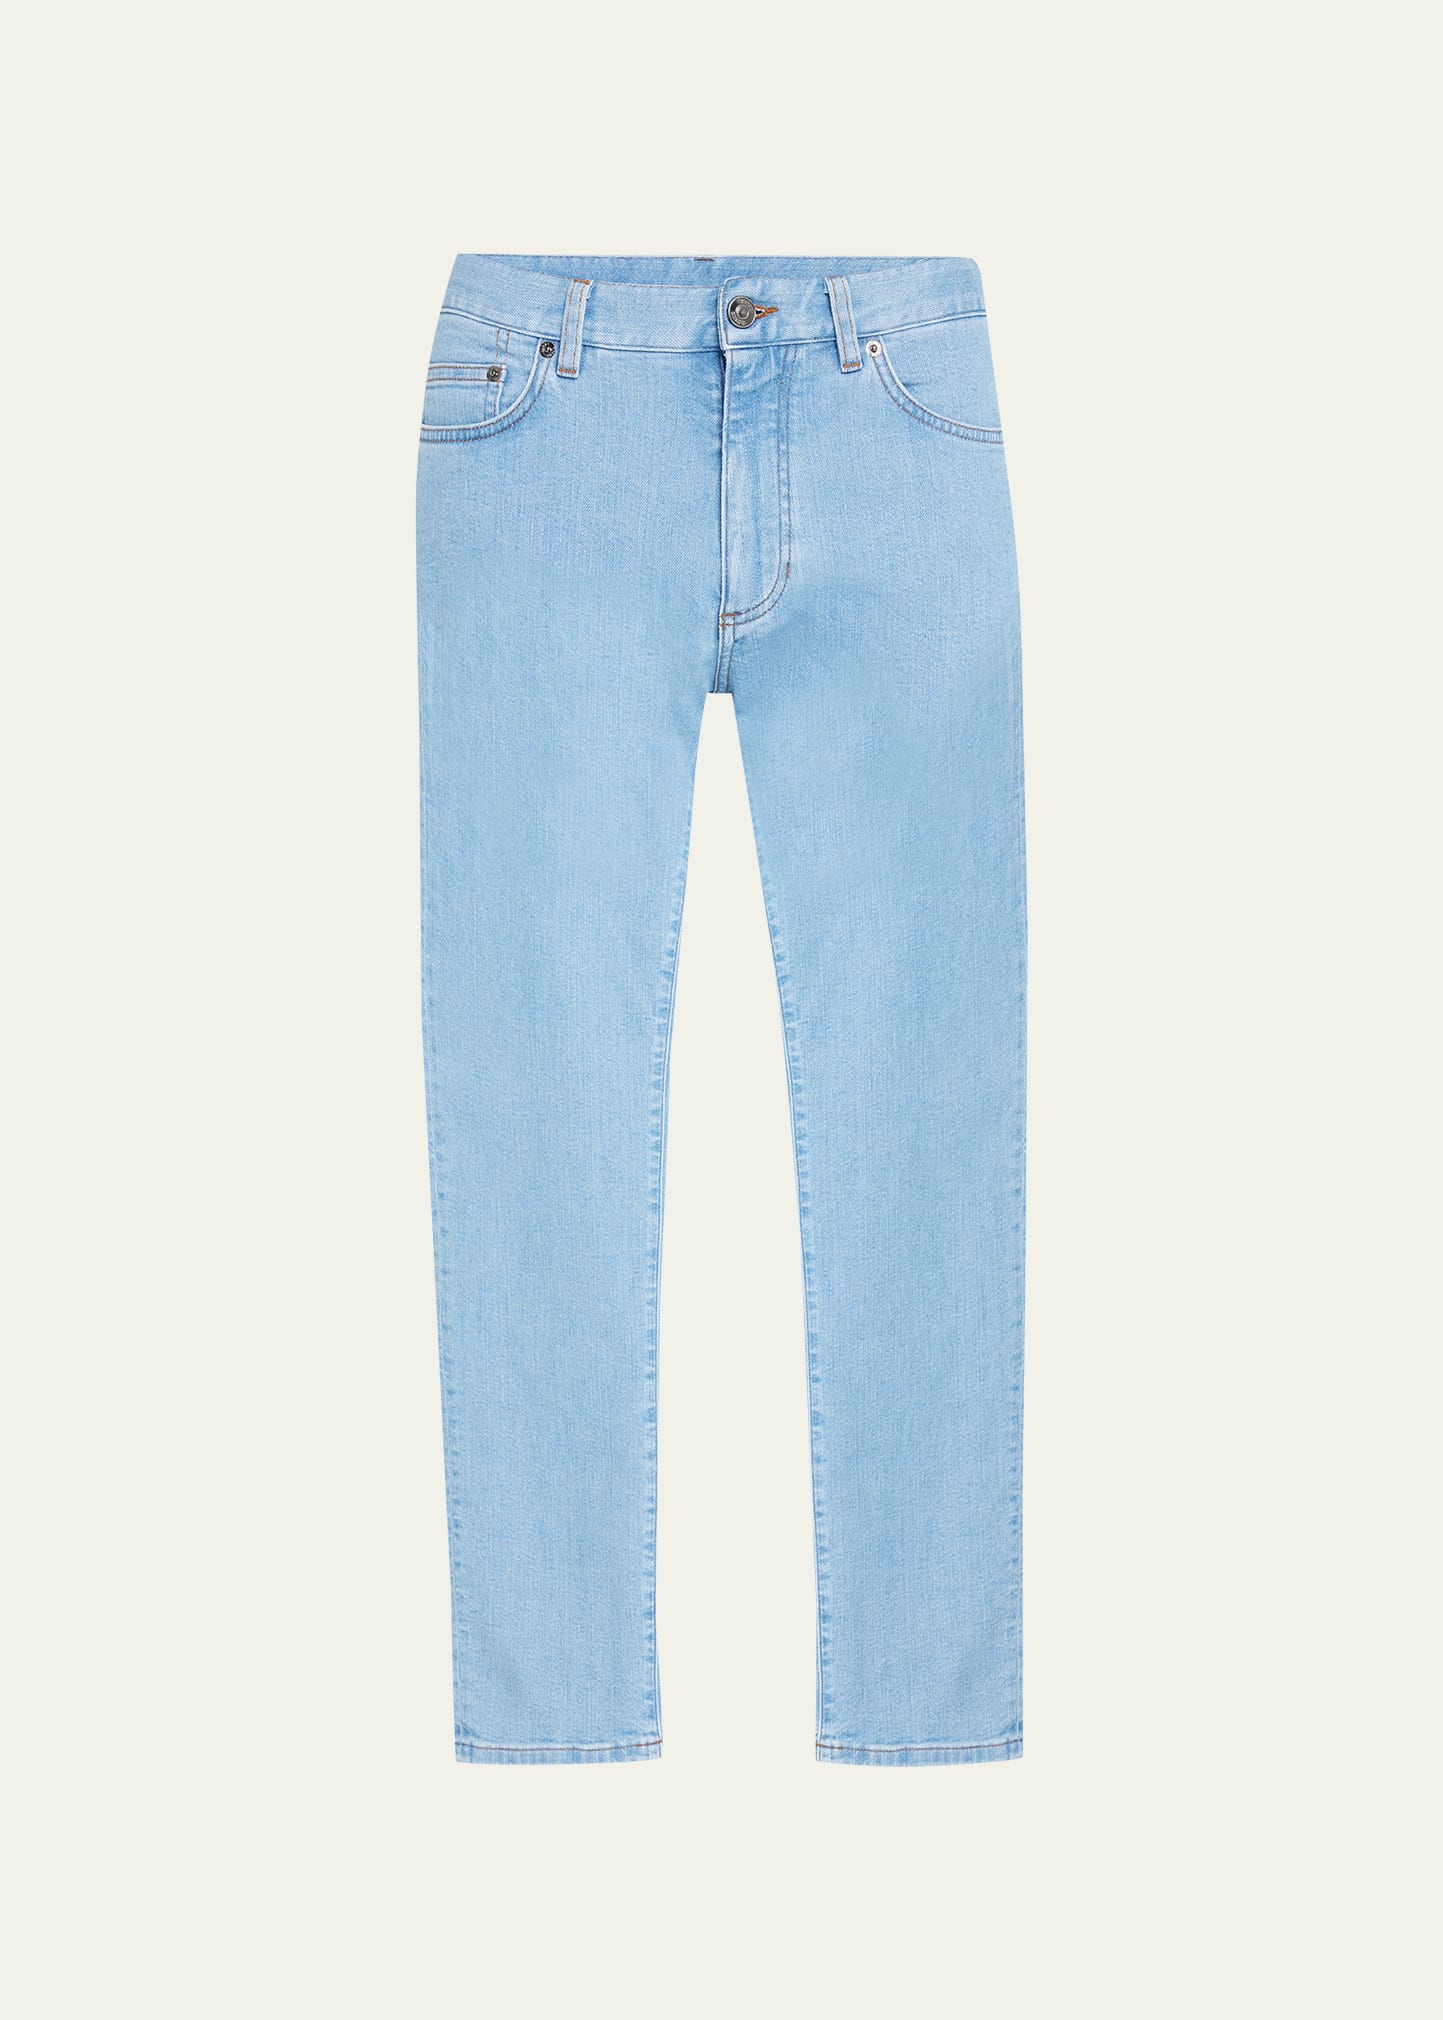 Men's Blue City 5-Pocket Jeans